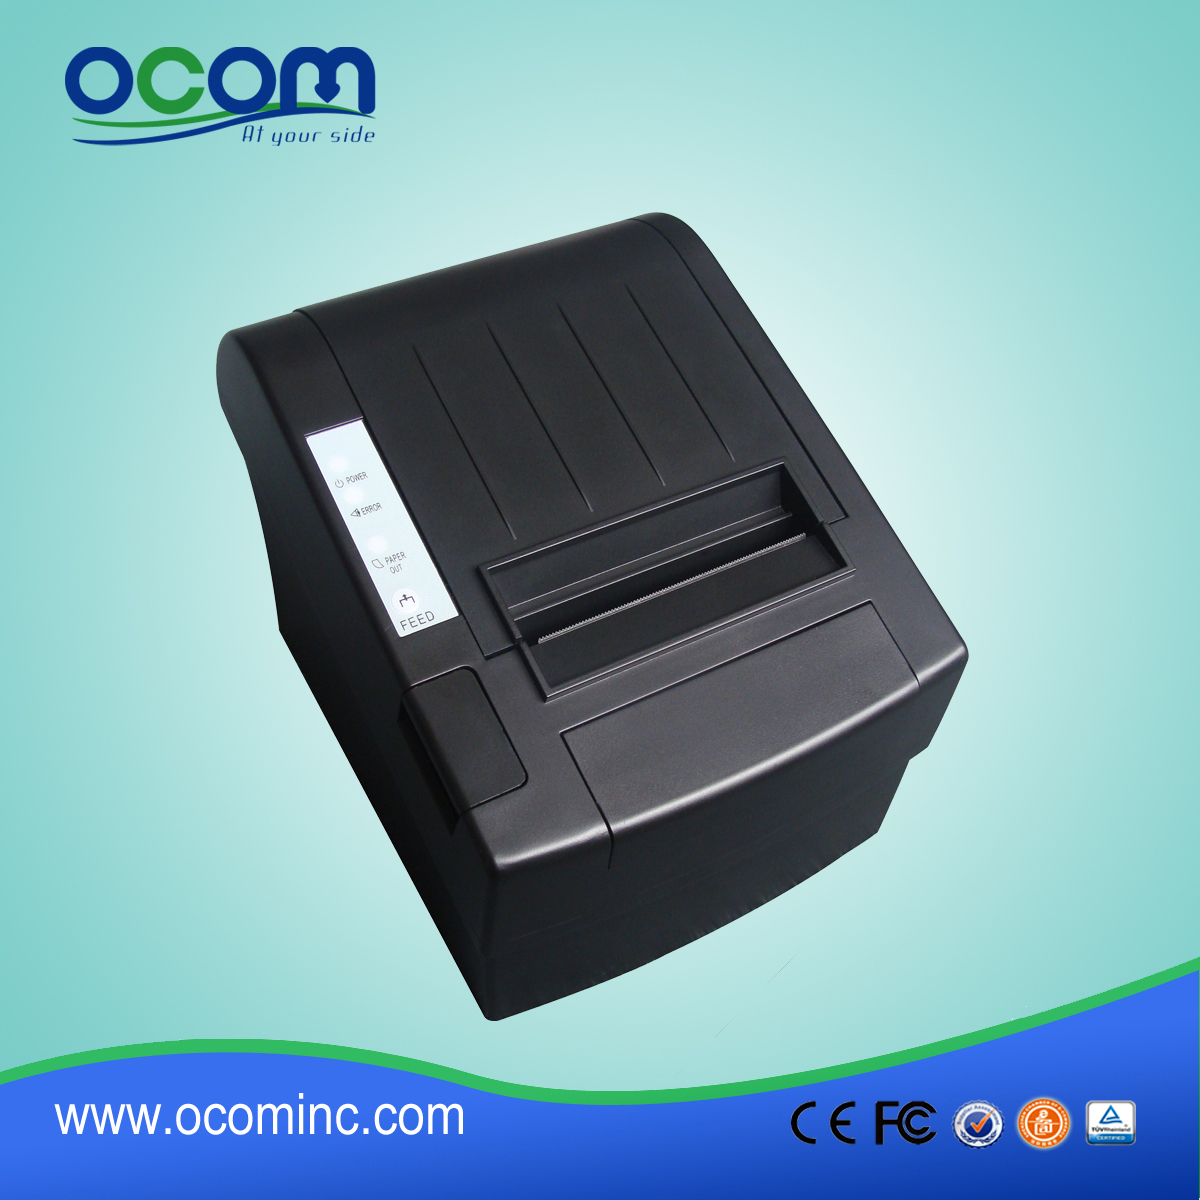 OCPP-806-URL: 300mm Ταχύτητα / sec Υψηλή εκτύπωση 3 Interfaces 80 χιλιοστά θερμικό εκτυπωτή Παραλαβή